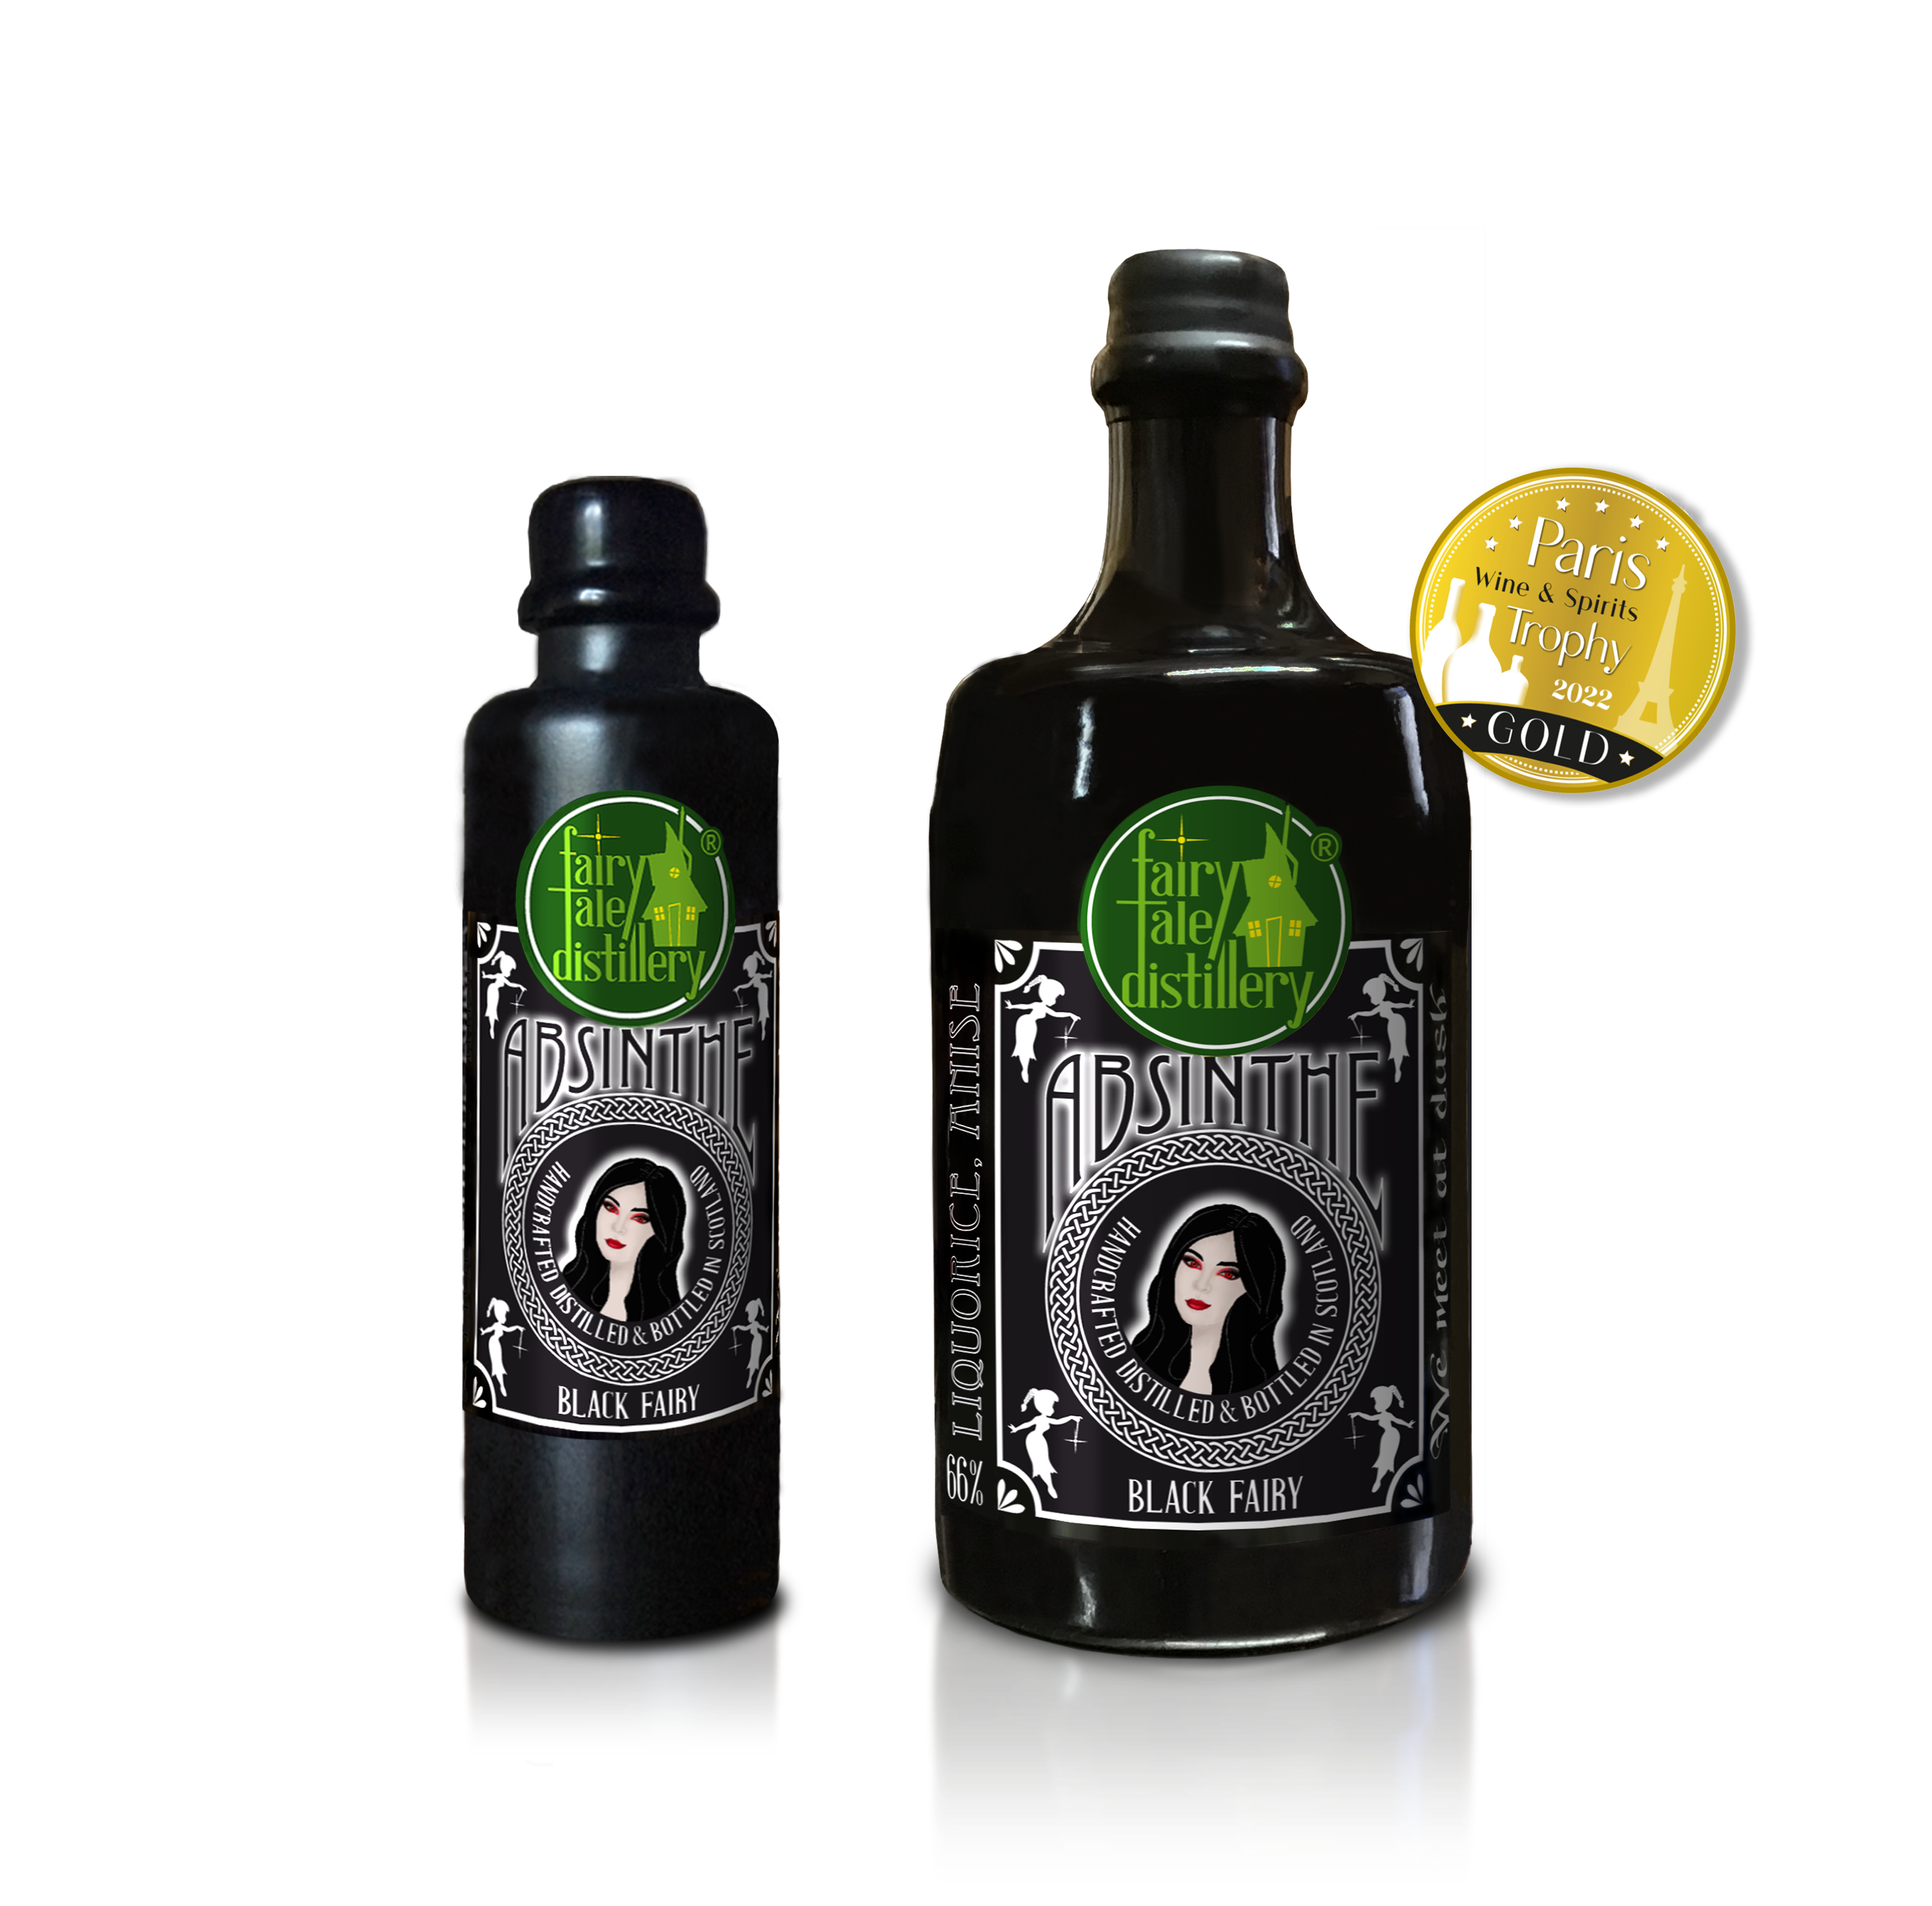 Black Fairy Highland Absinthe bottle from Fairytale Distillery with Paris Wine & Spirits Trophy 2022 Gold